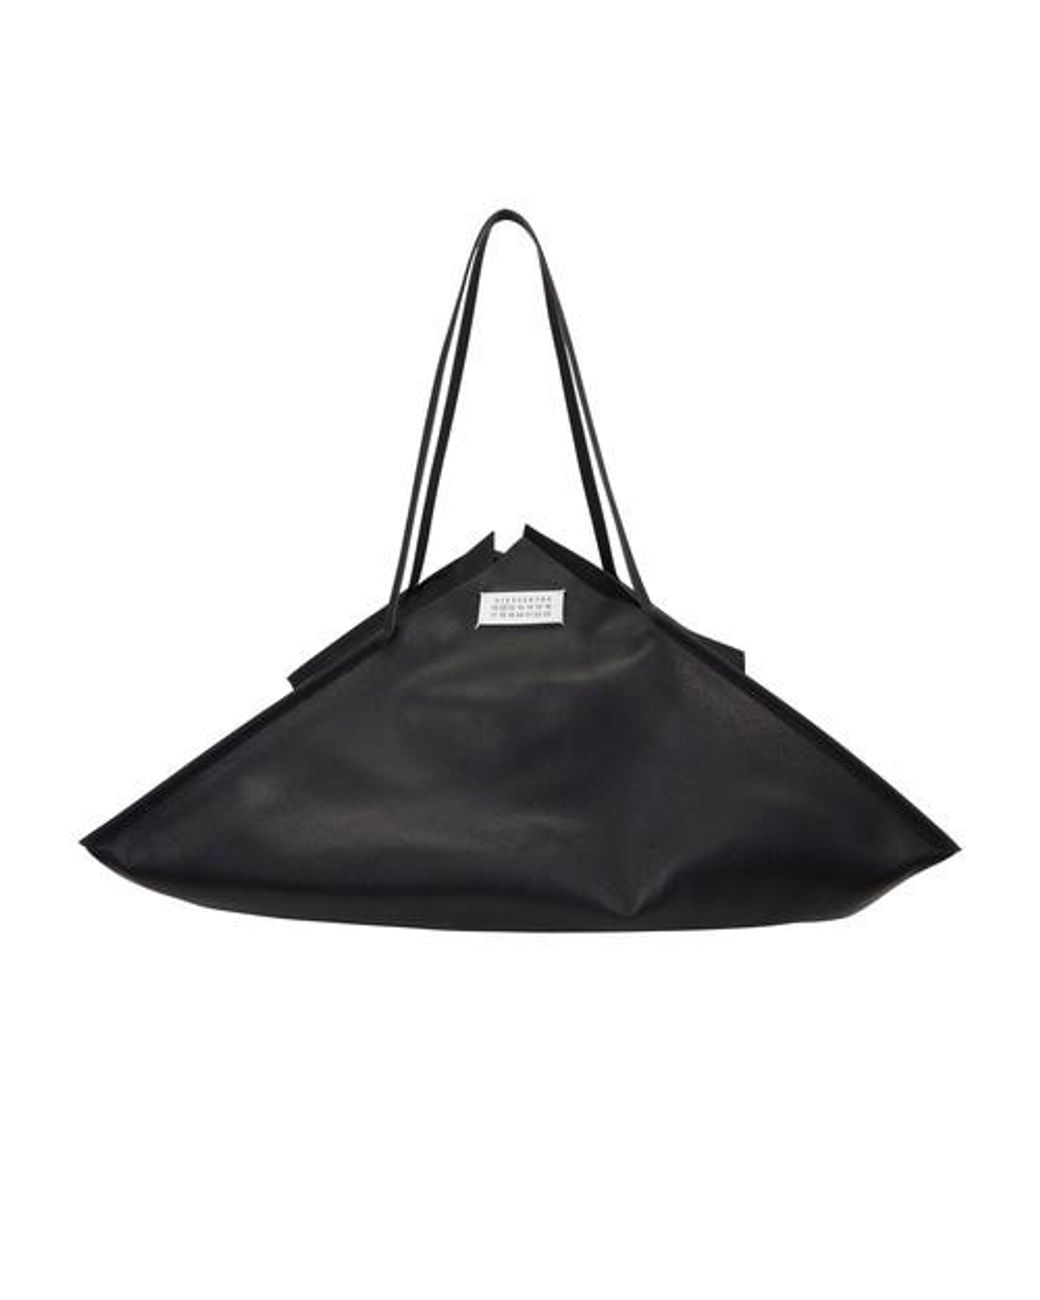 Maison Margiela Leather Umbrella Tote Bag in Black | Lyst